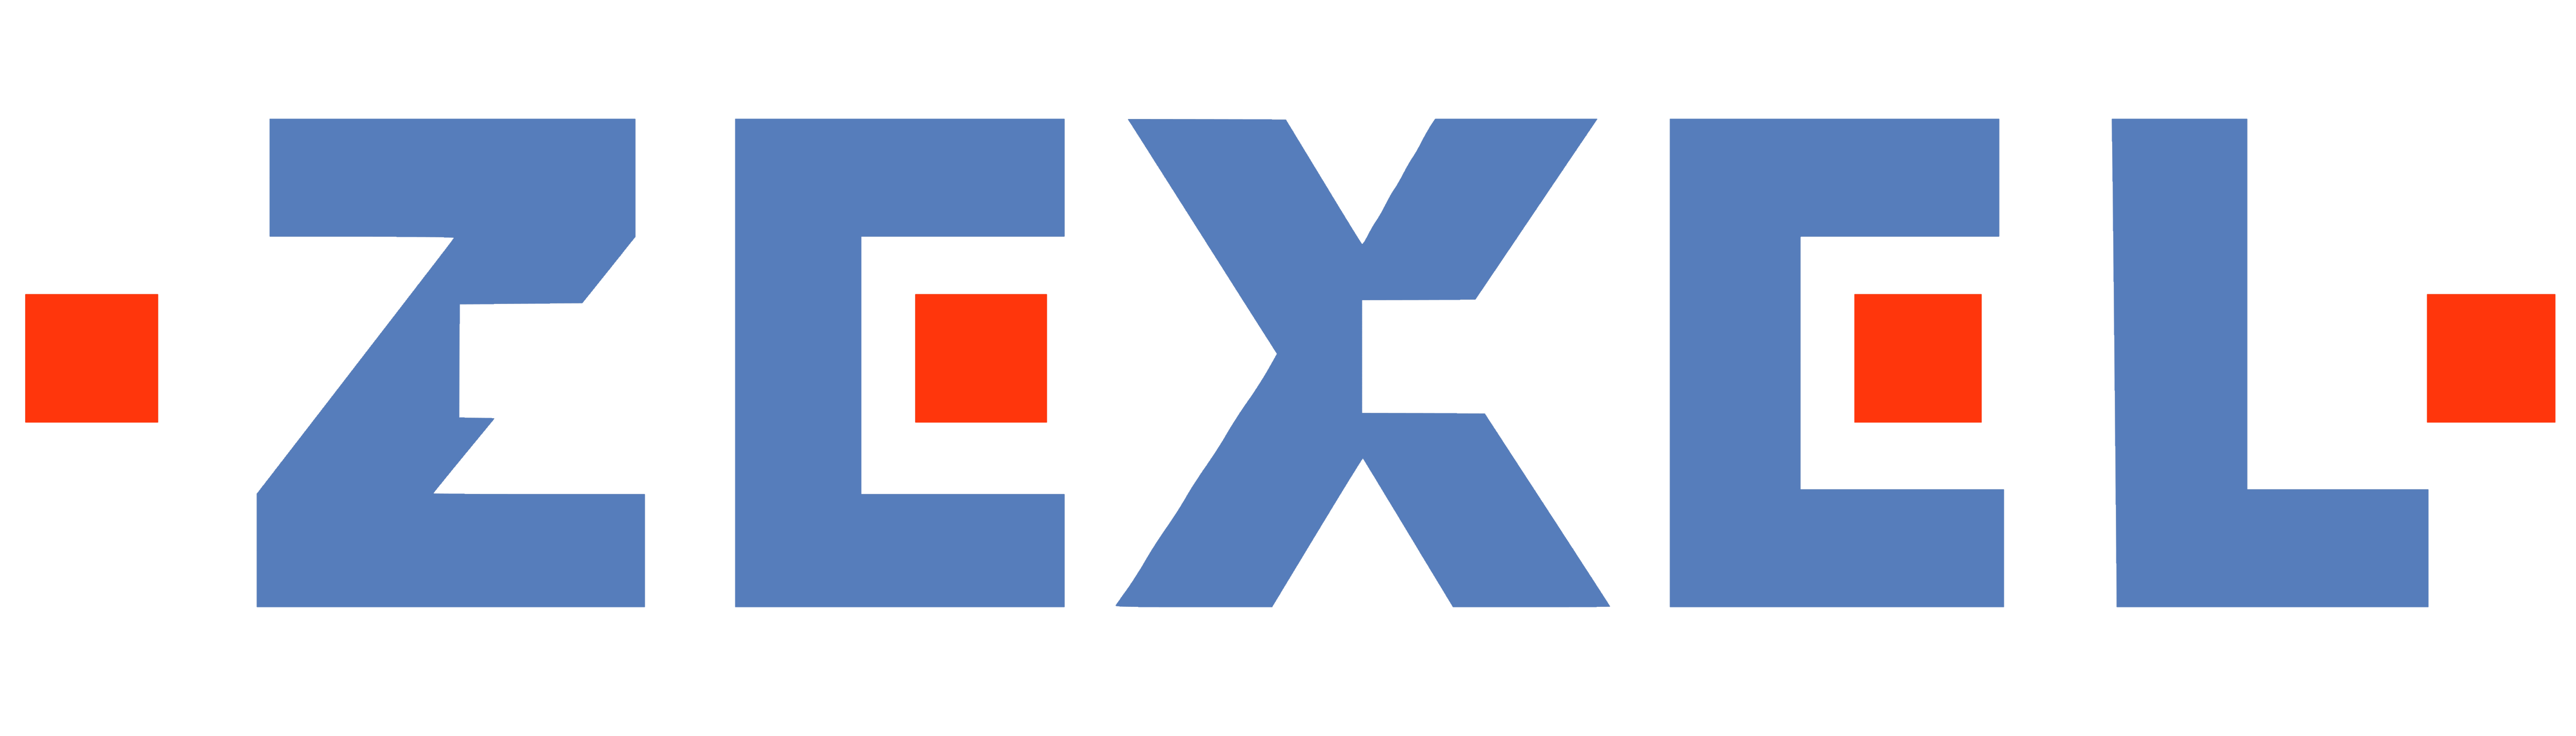 Zexel logo, logotype